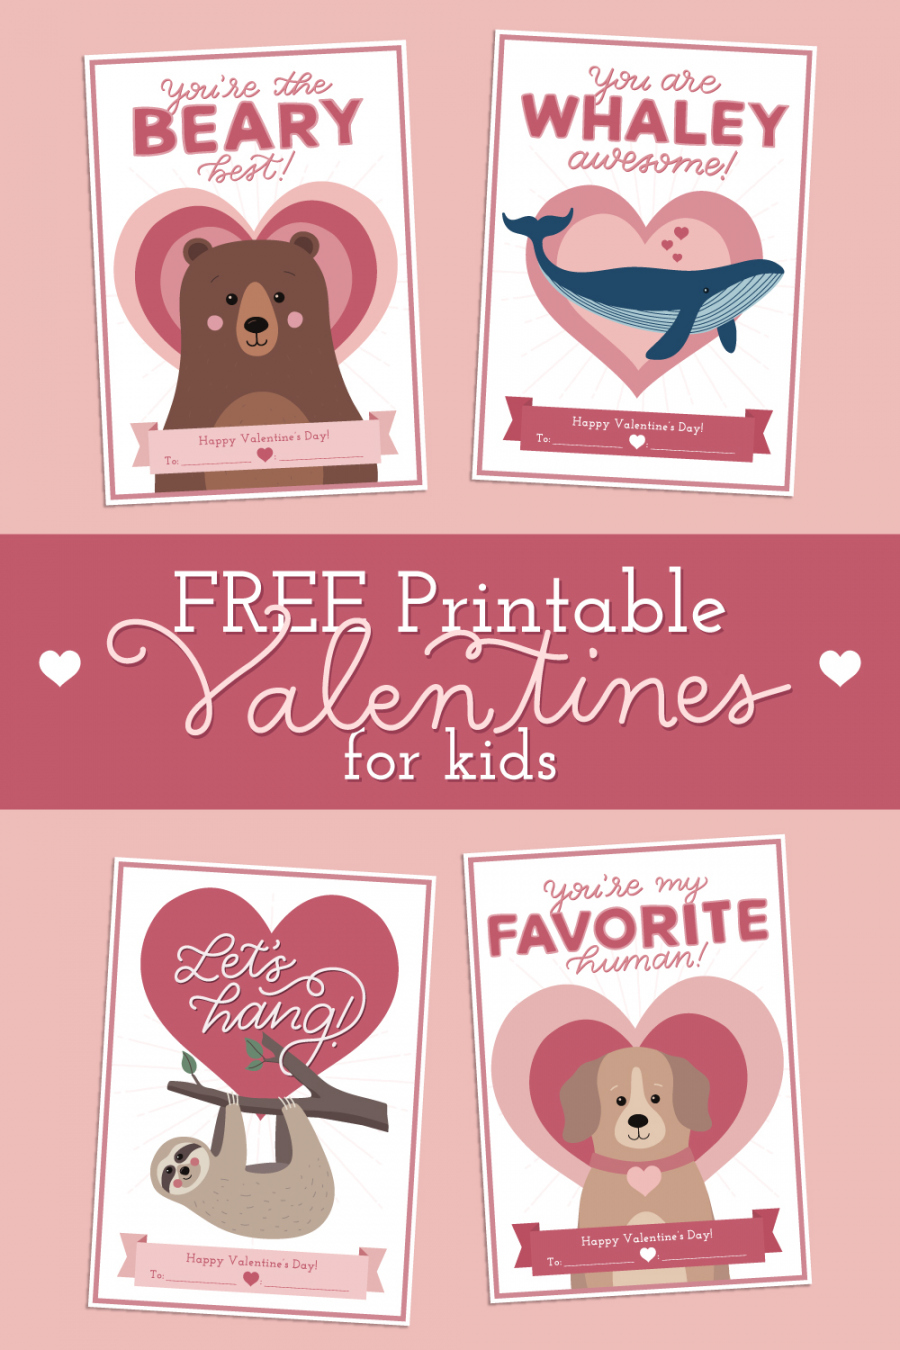 Free Printable Valentines Cards - Printable - Free Printable Valentine Cards for Your Kids  Vivint